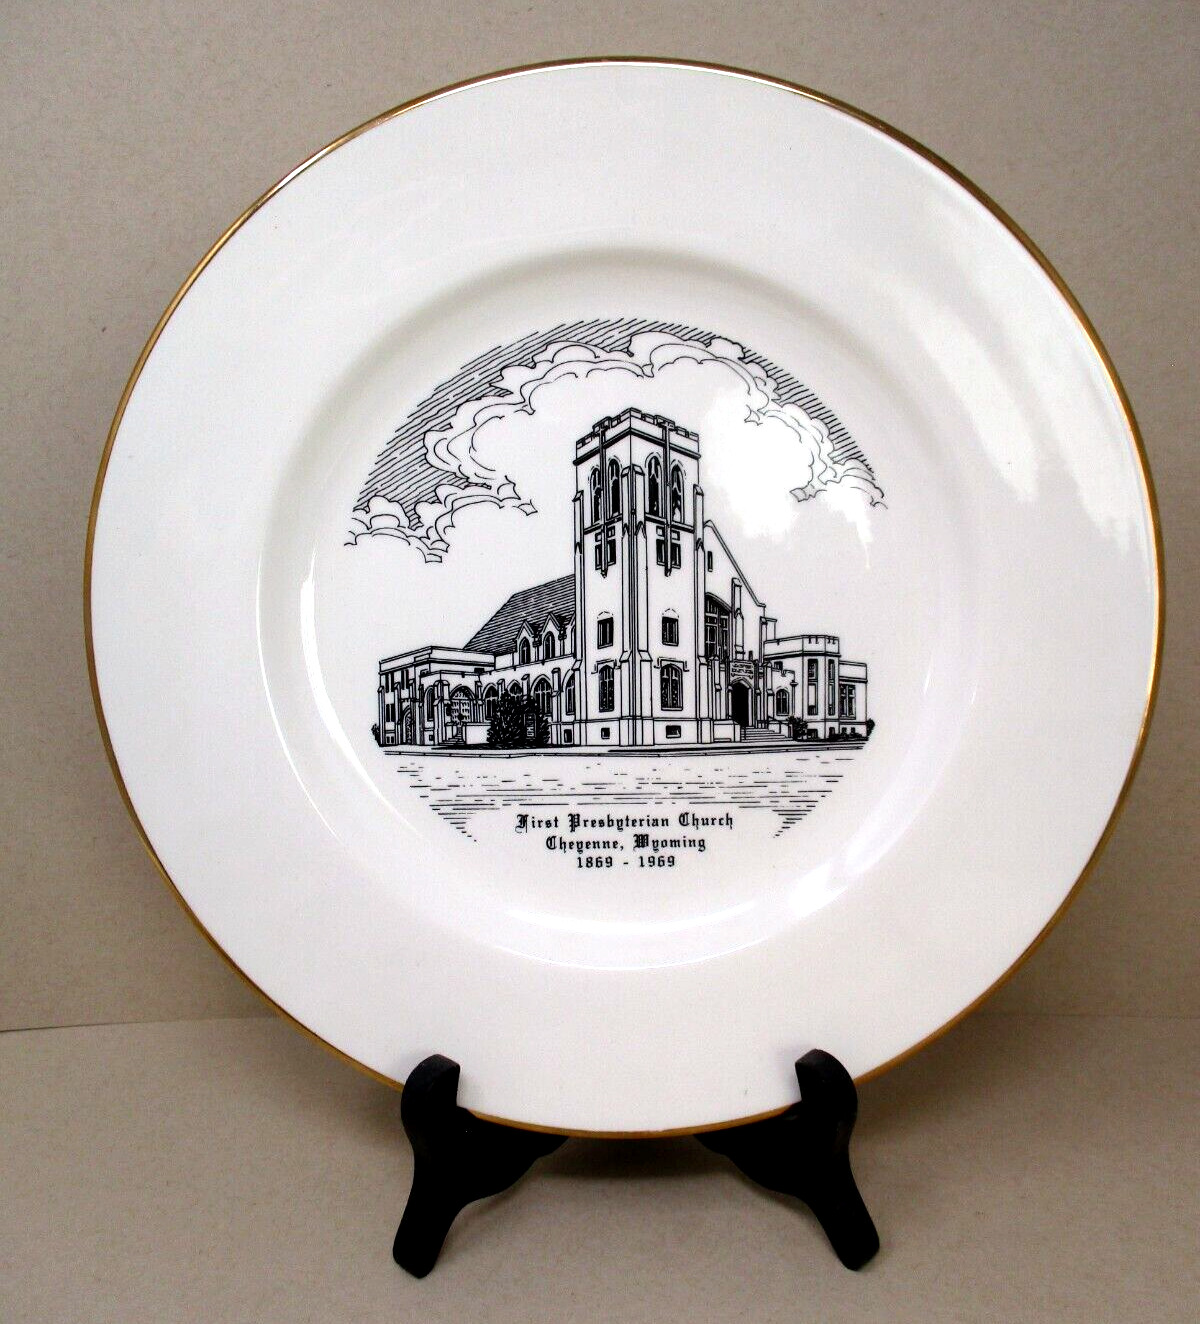 Vintage First Presbyterian Church Plate Cheyenne Wyoming 1969 Religious